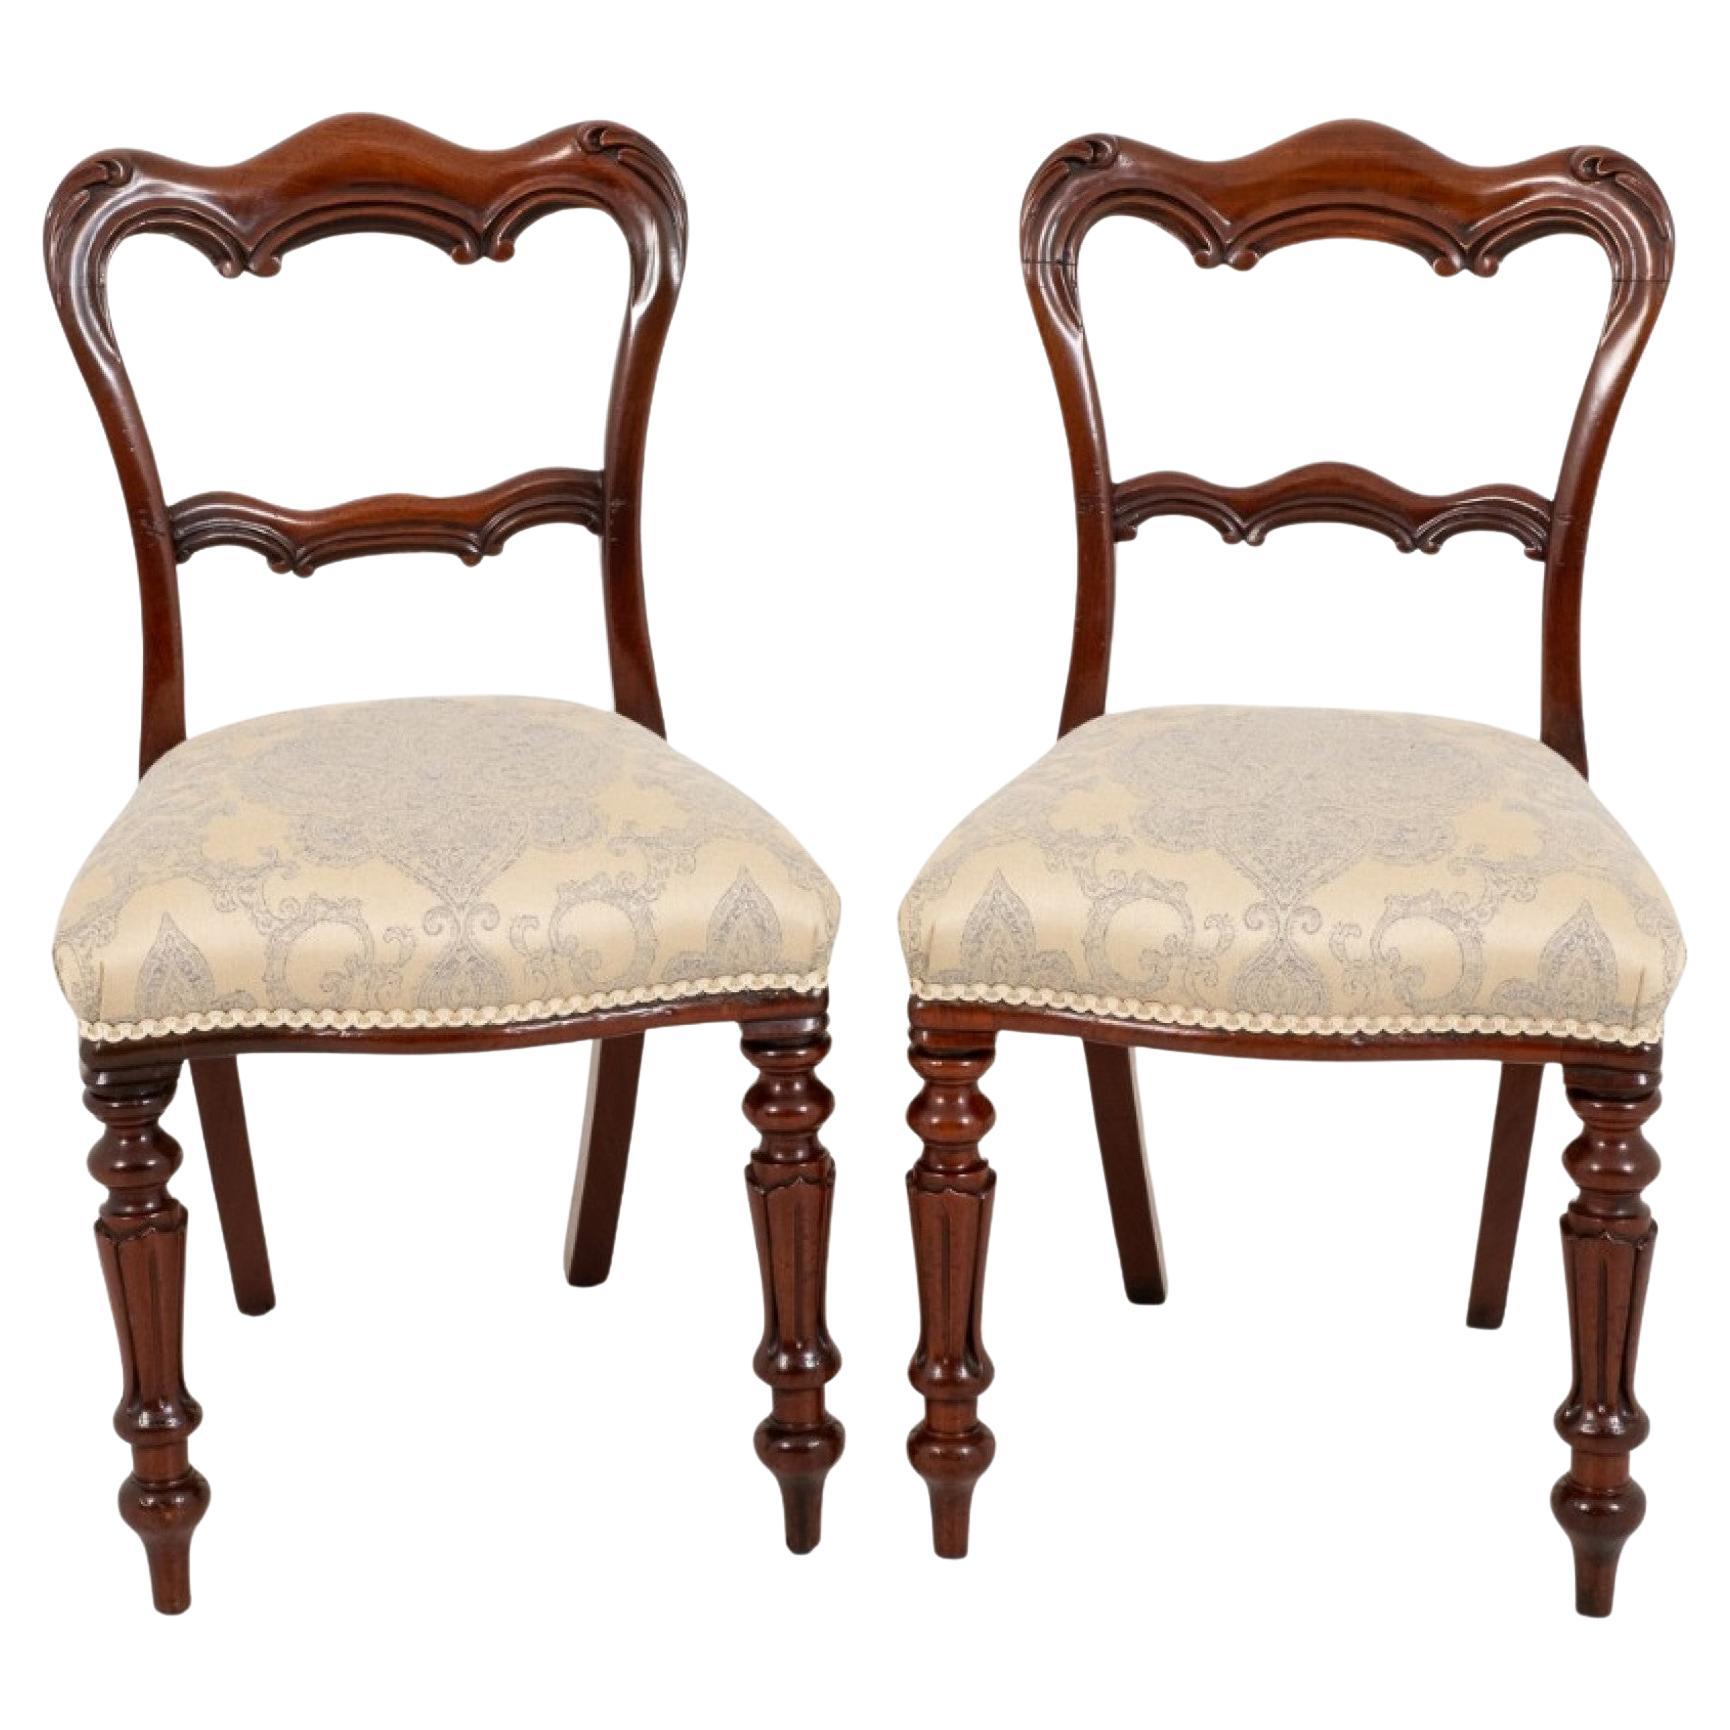 Pair William IV Chairs, Antique Mahogany Chair